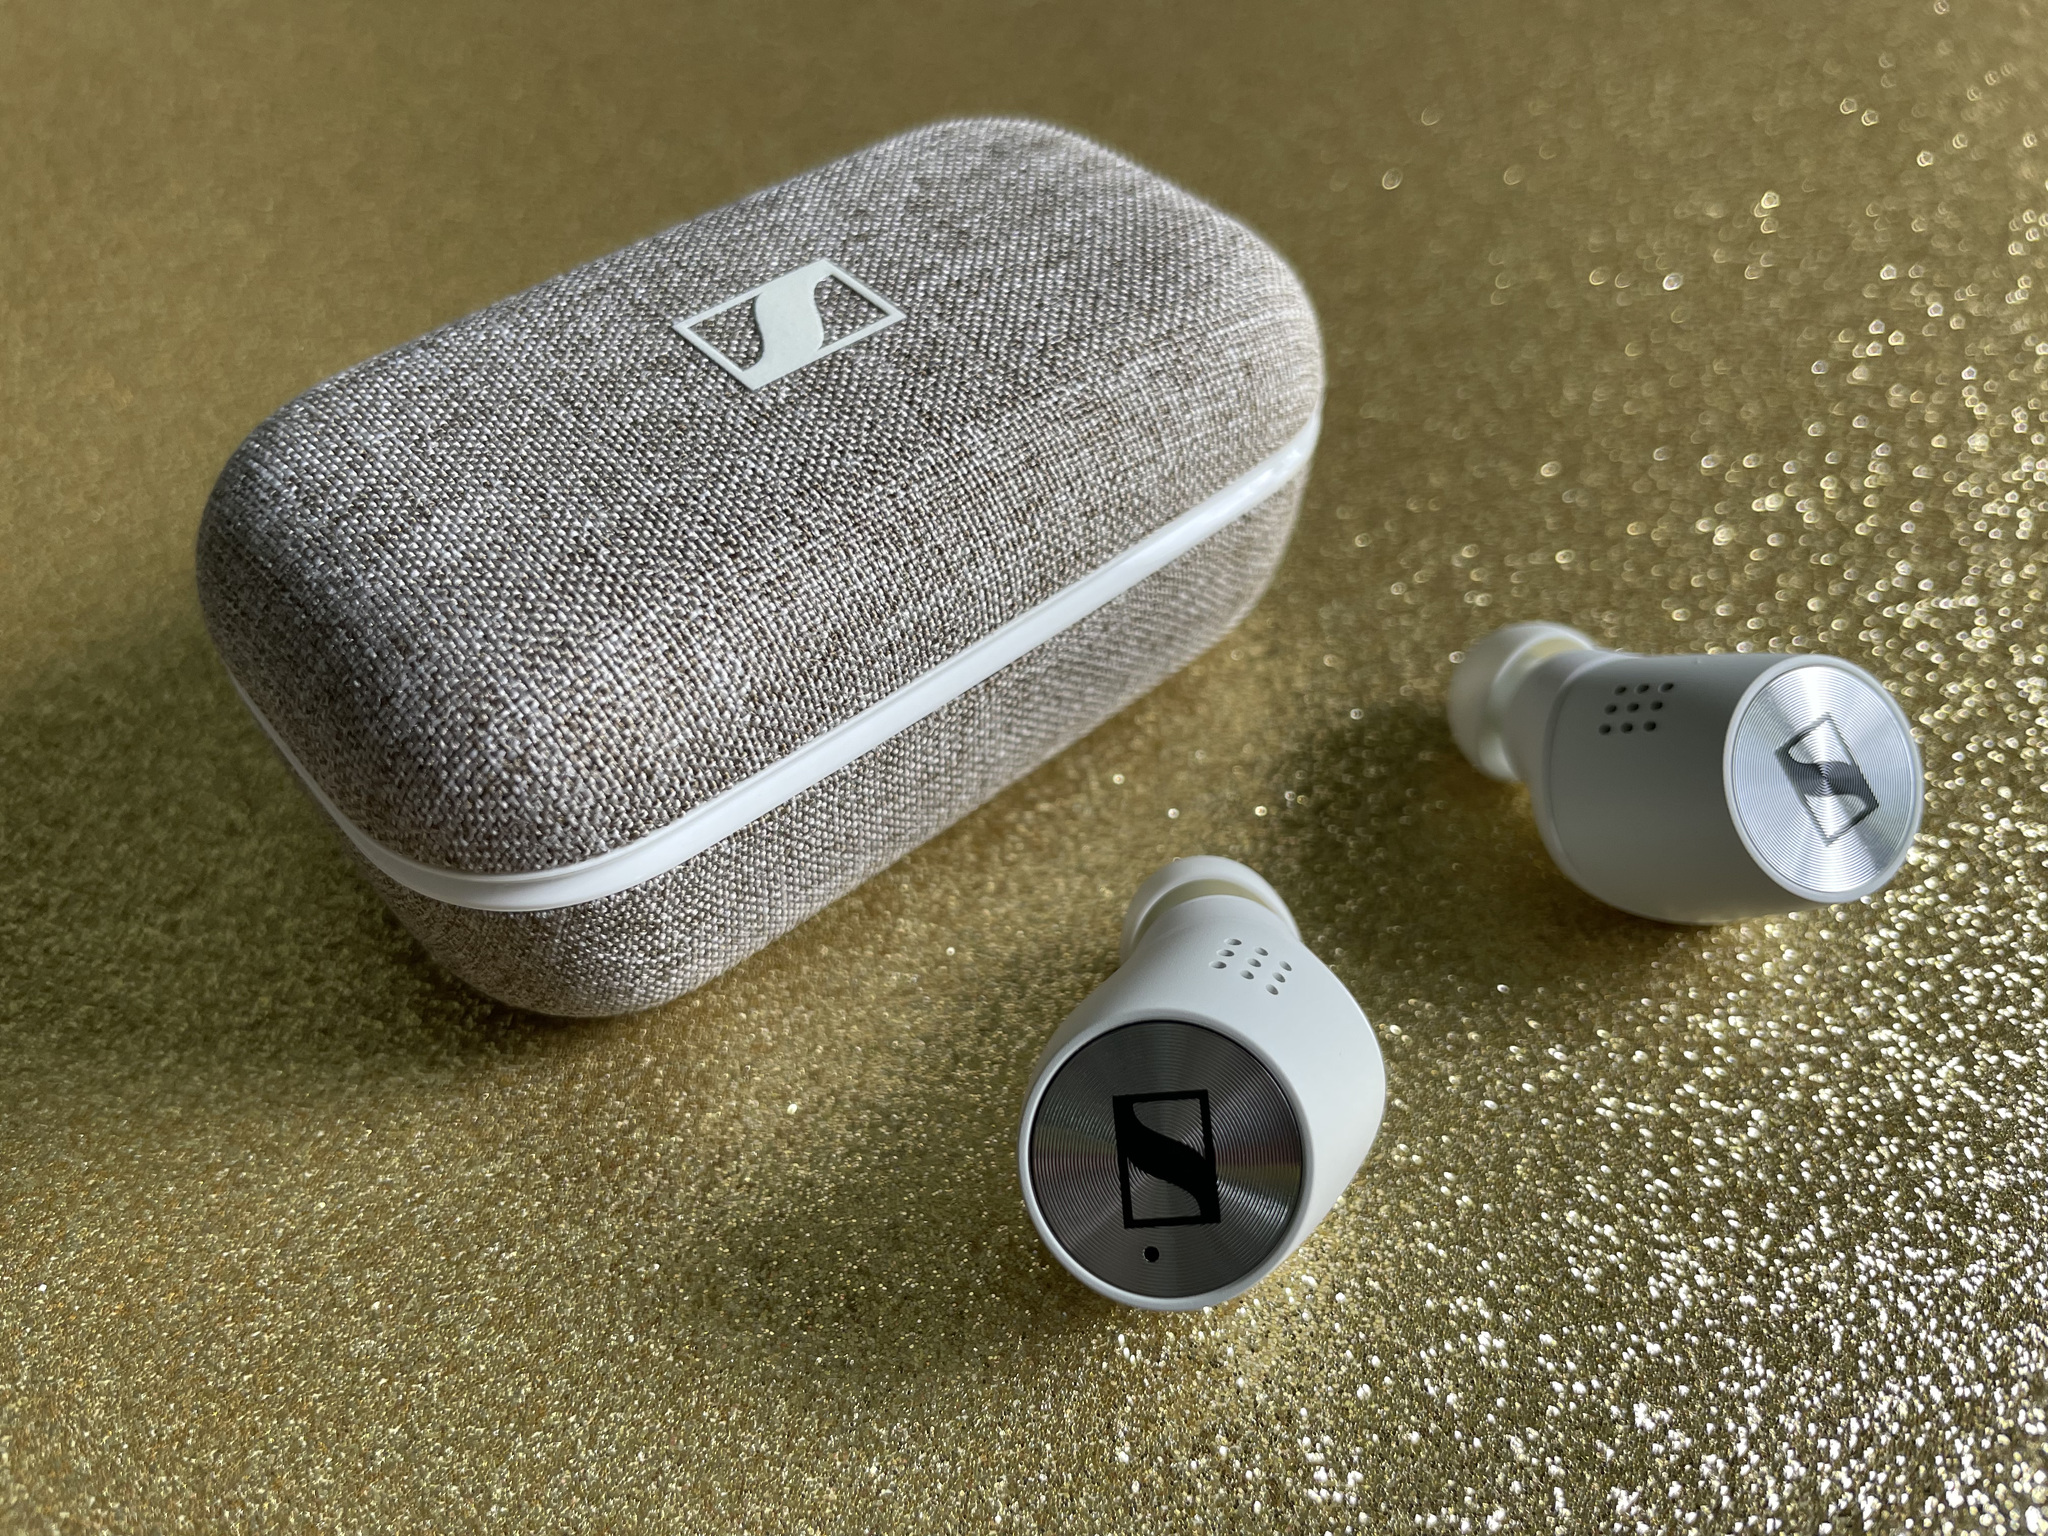 Sennheiser MOMENTUM True Wireless 2 Earbuds review: Amazing sound